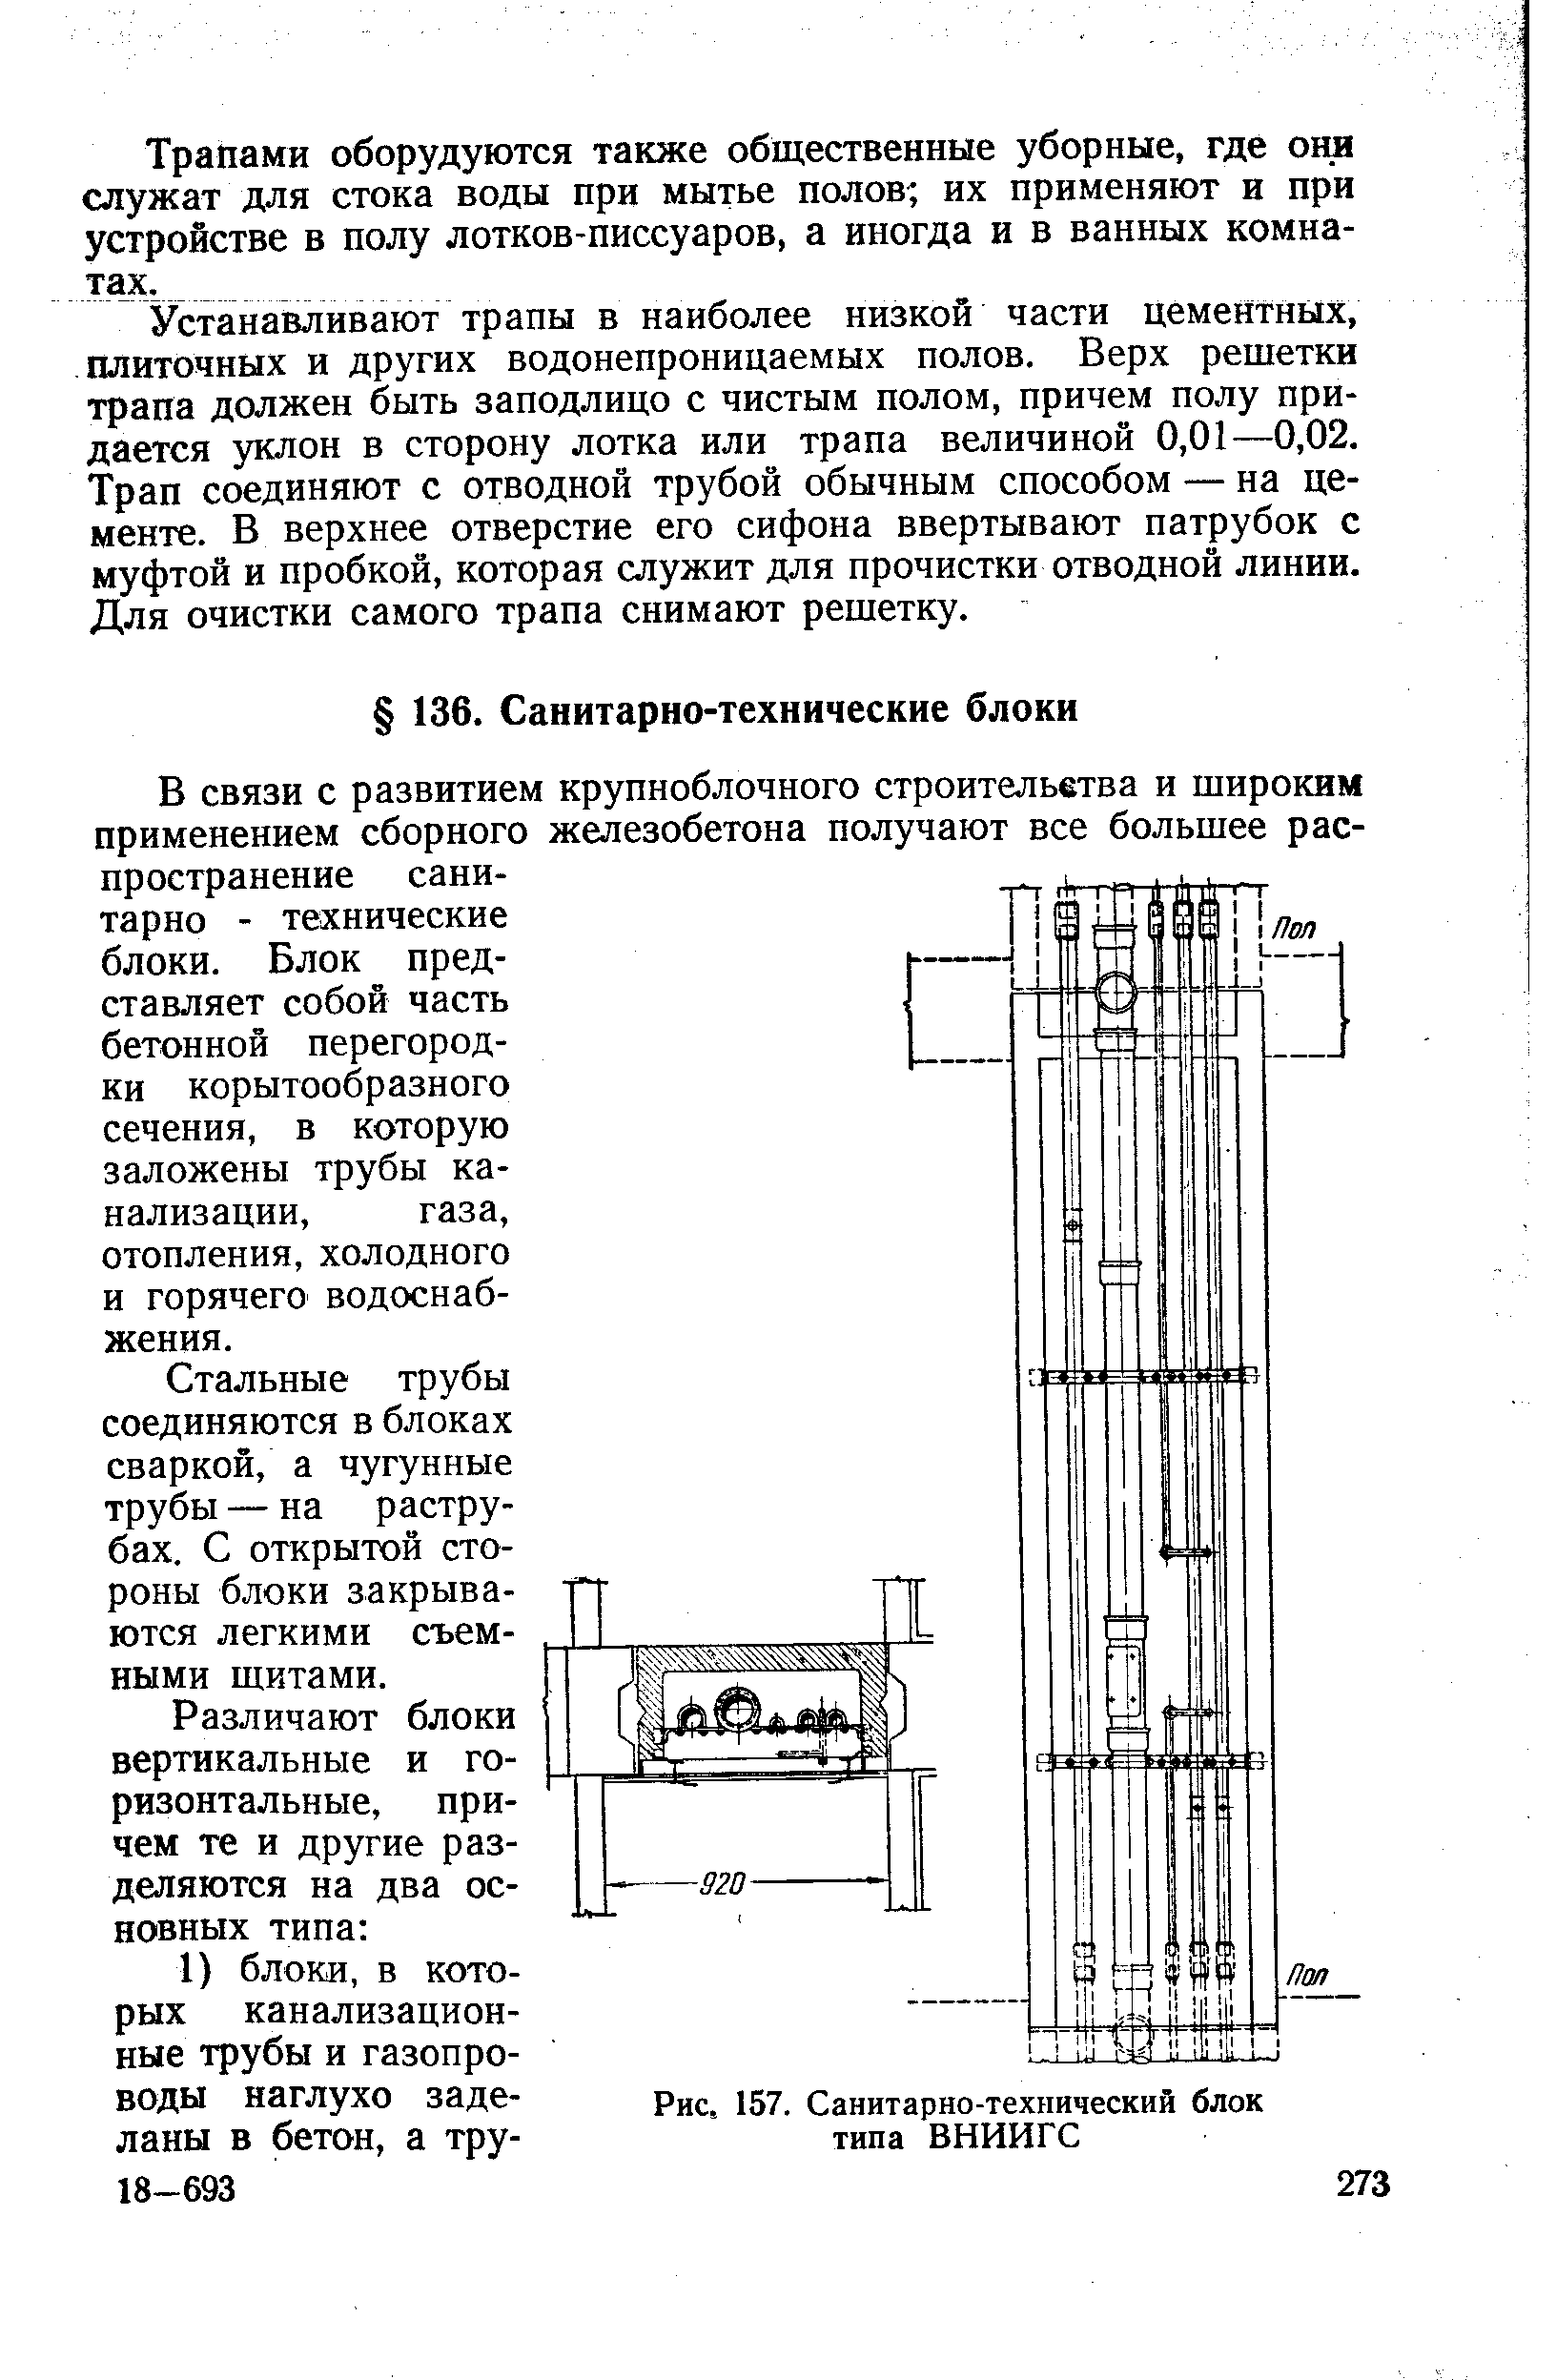 Рис. 157. Санитарно-технический блок типа ВНИИГС
